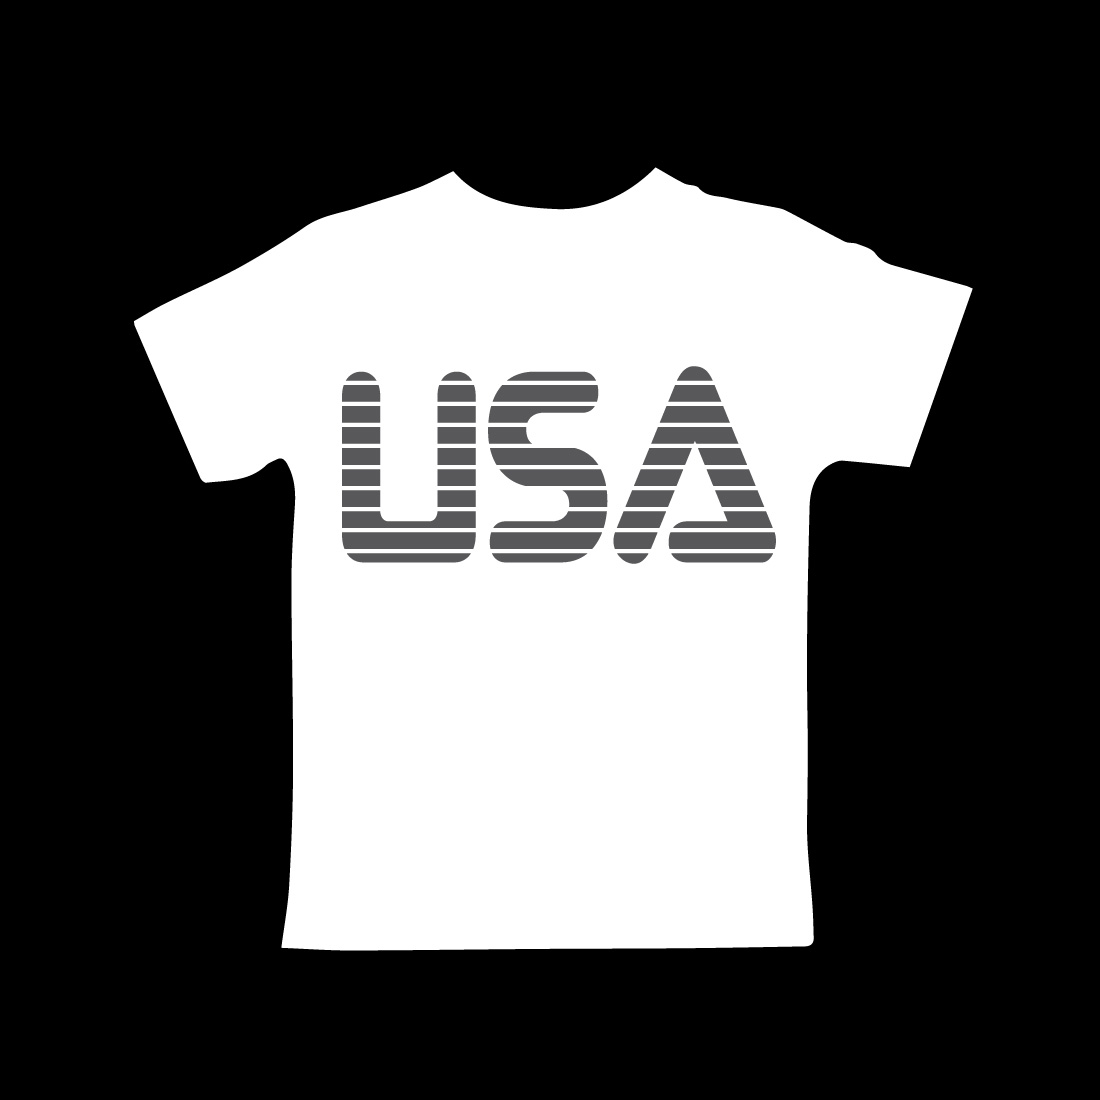 USA T-Shart Design cover image.